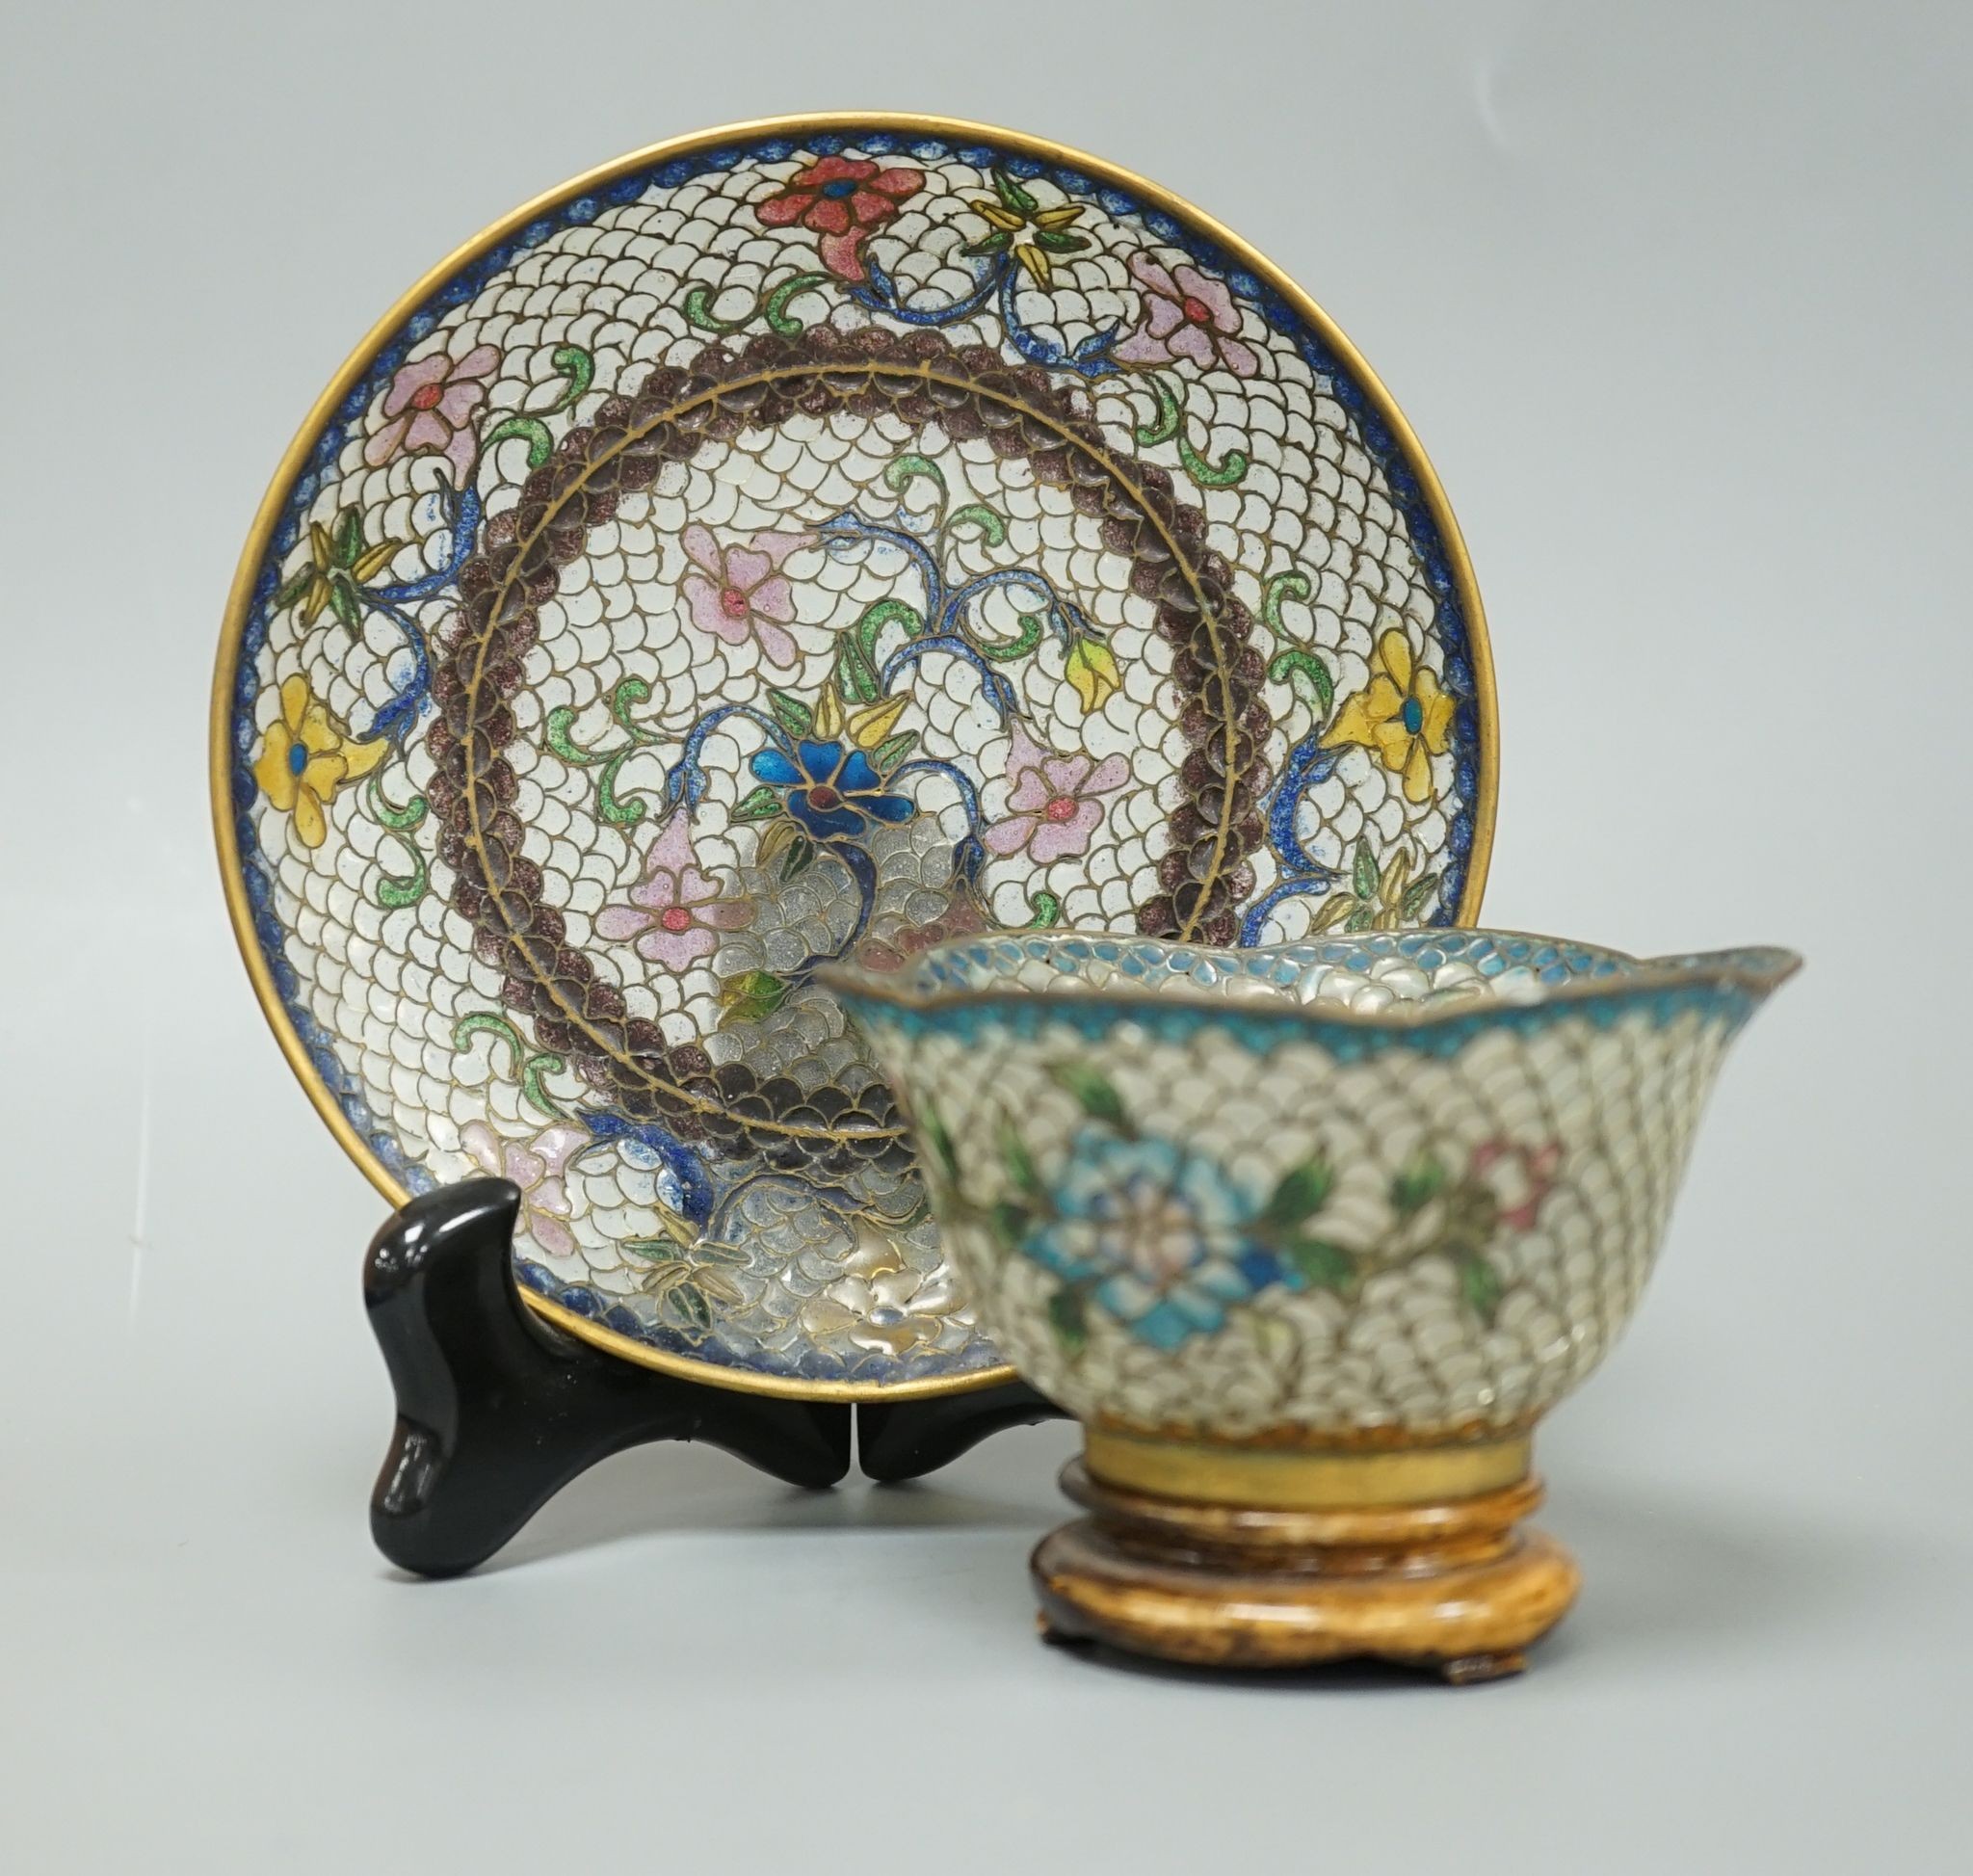 A Chinese plique a jour enamel cup and saucer 13cm diameter